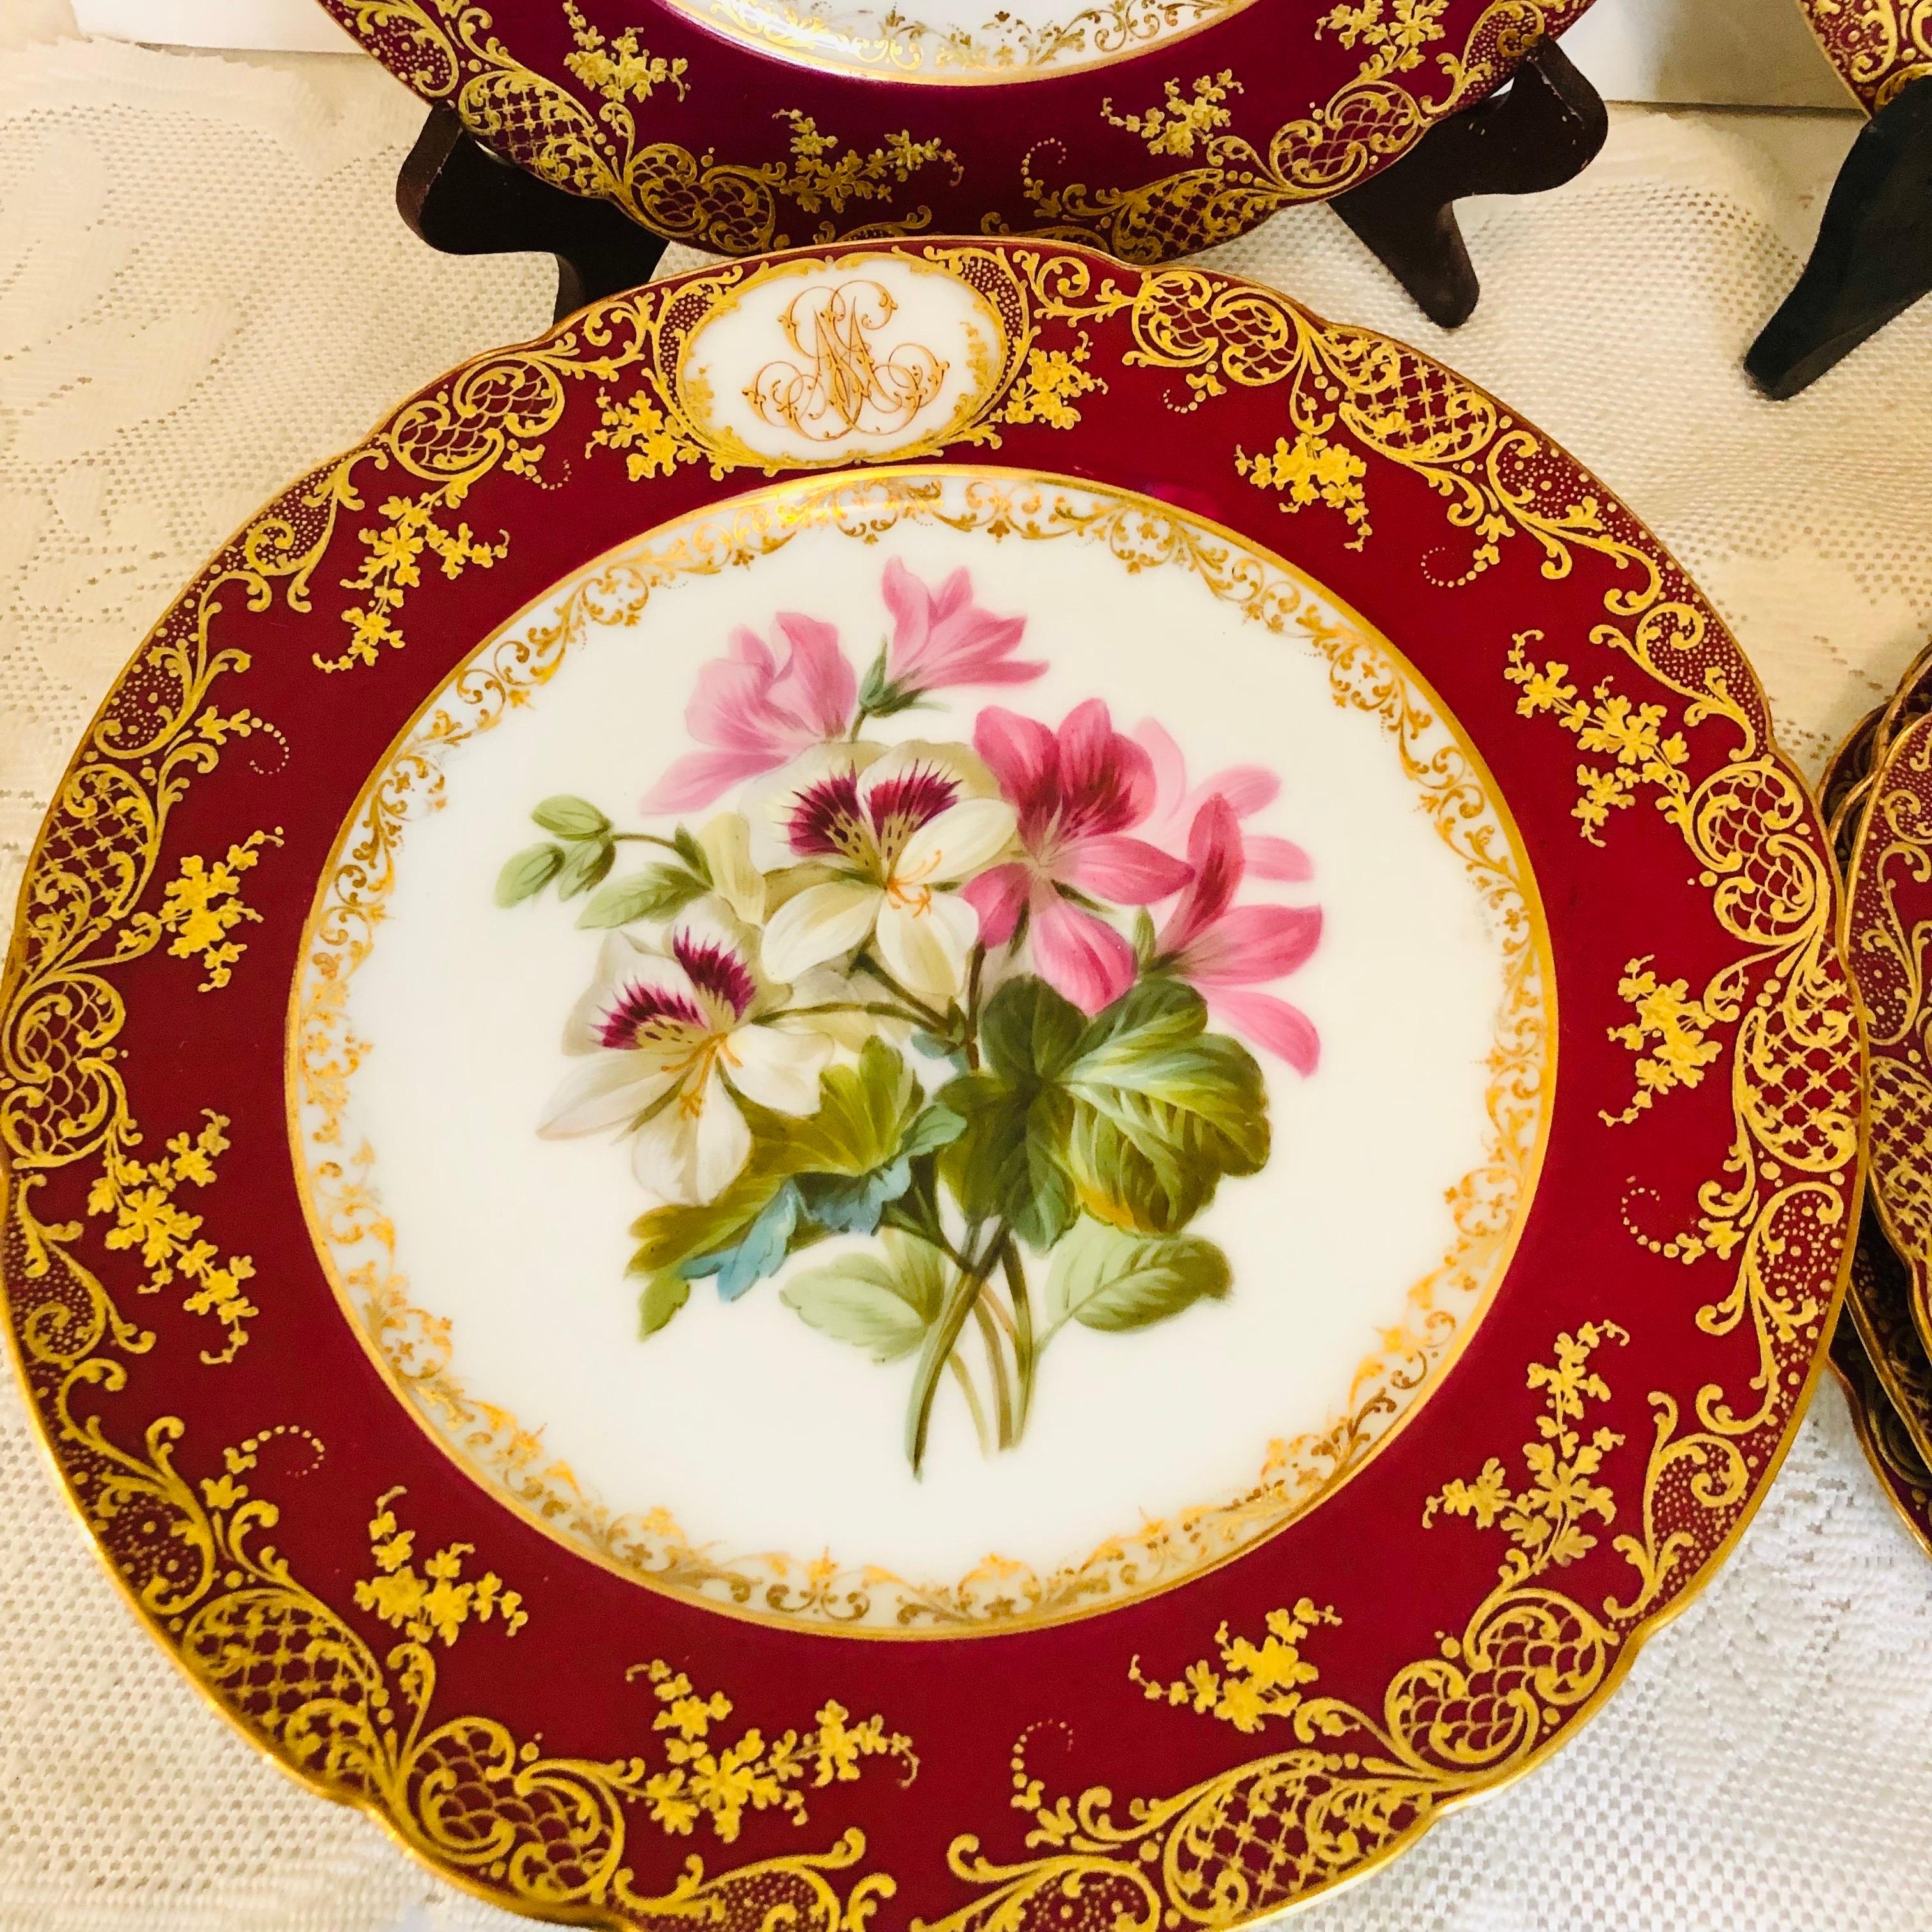 Gilt Ten Paris Porcelain Plates Each Painted with Different Flower Bouquets and Fruit For Sale